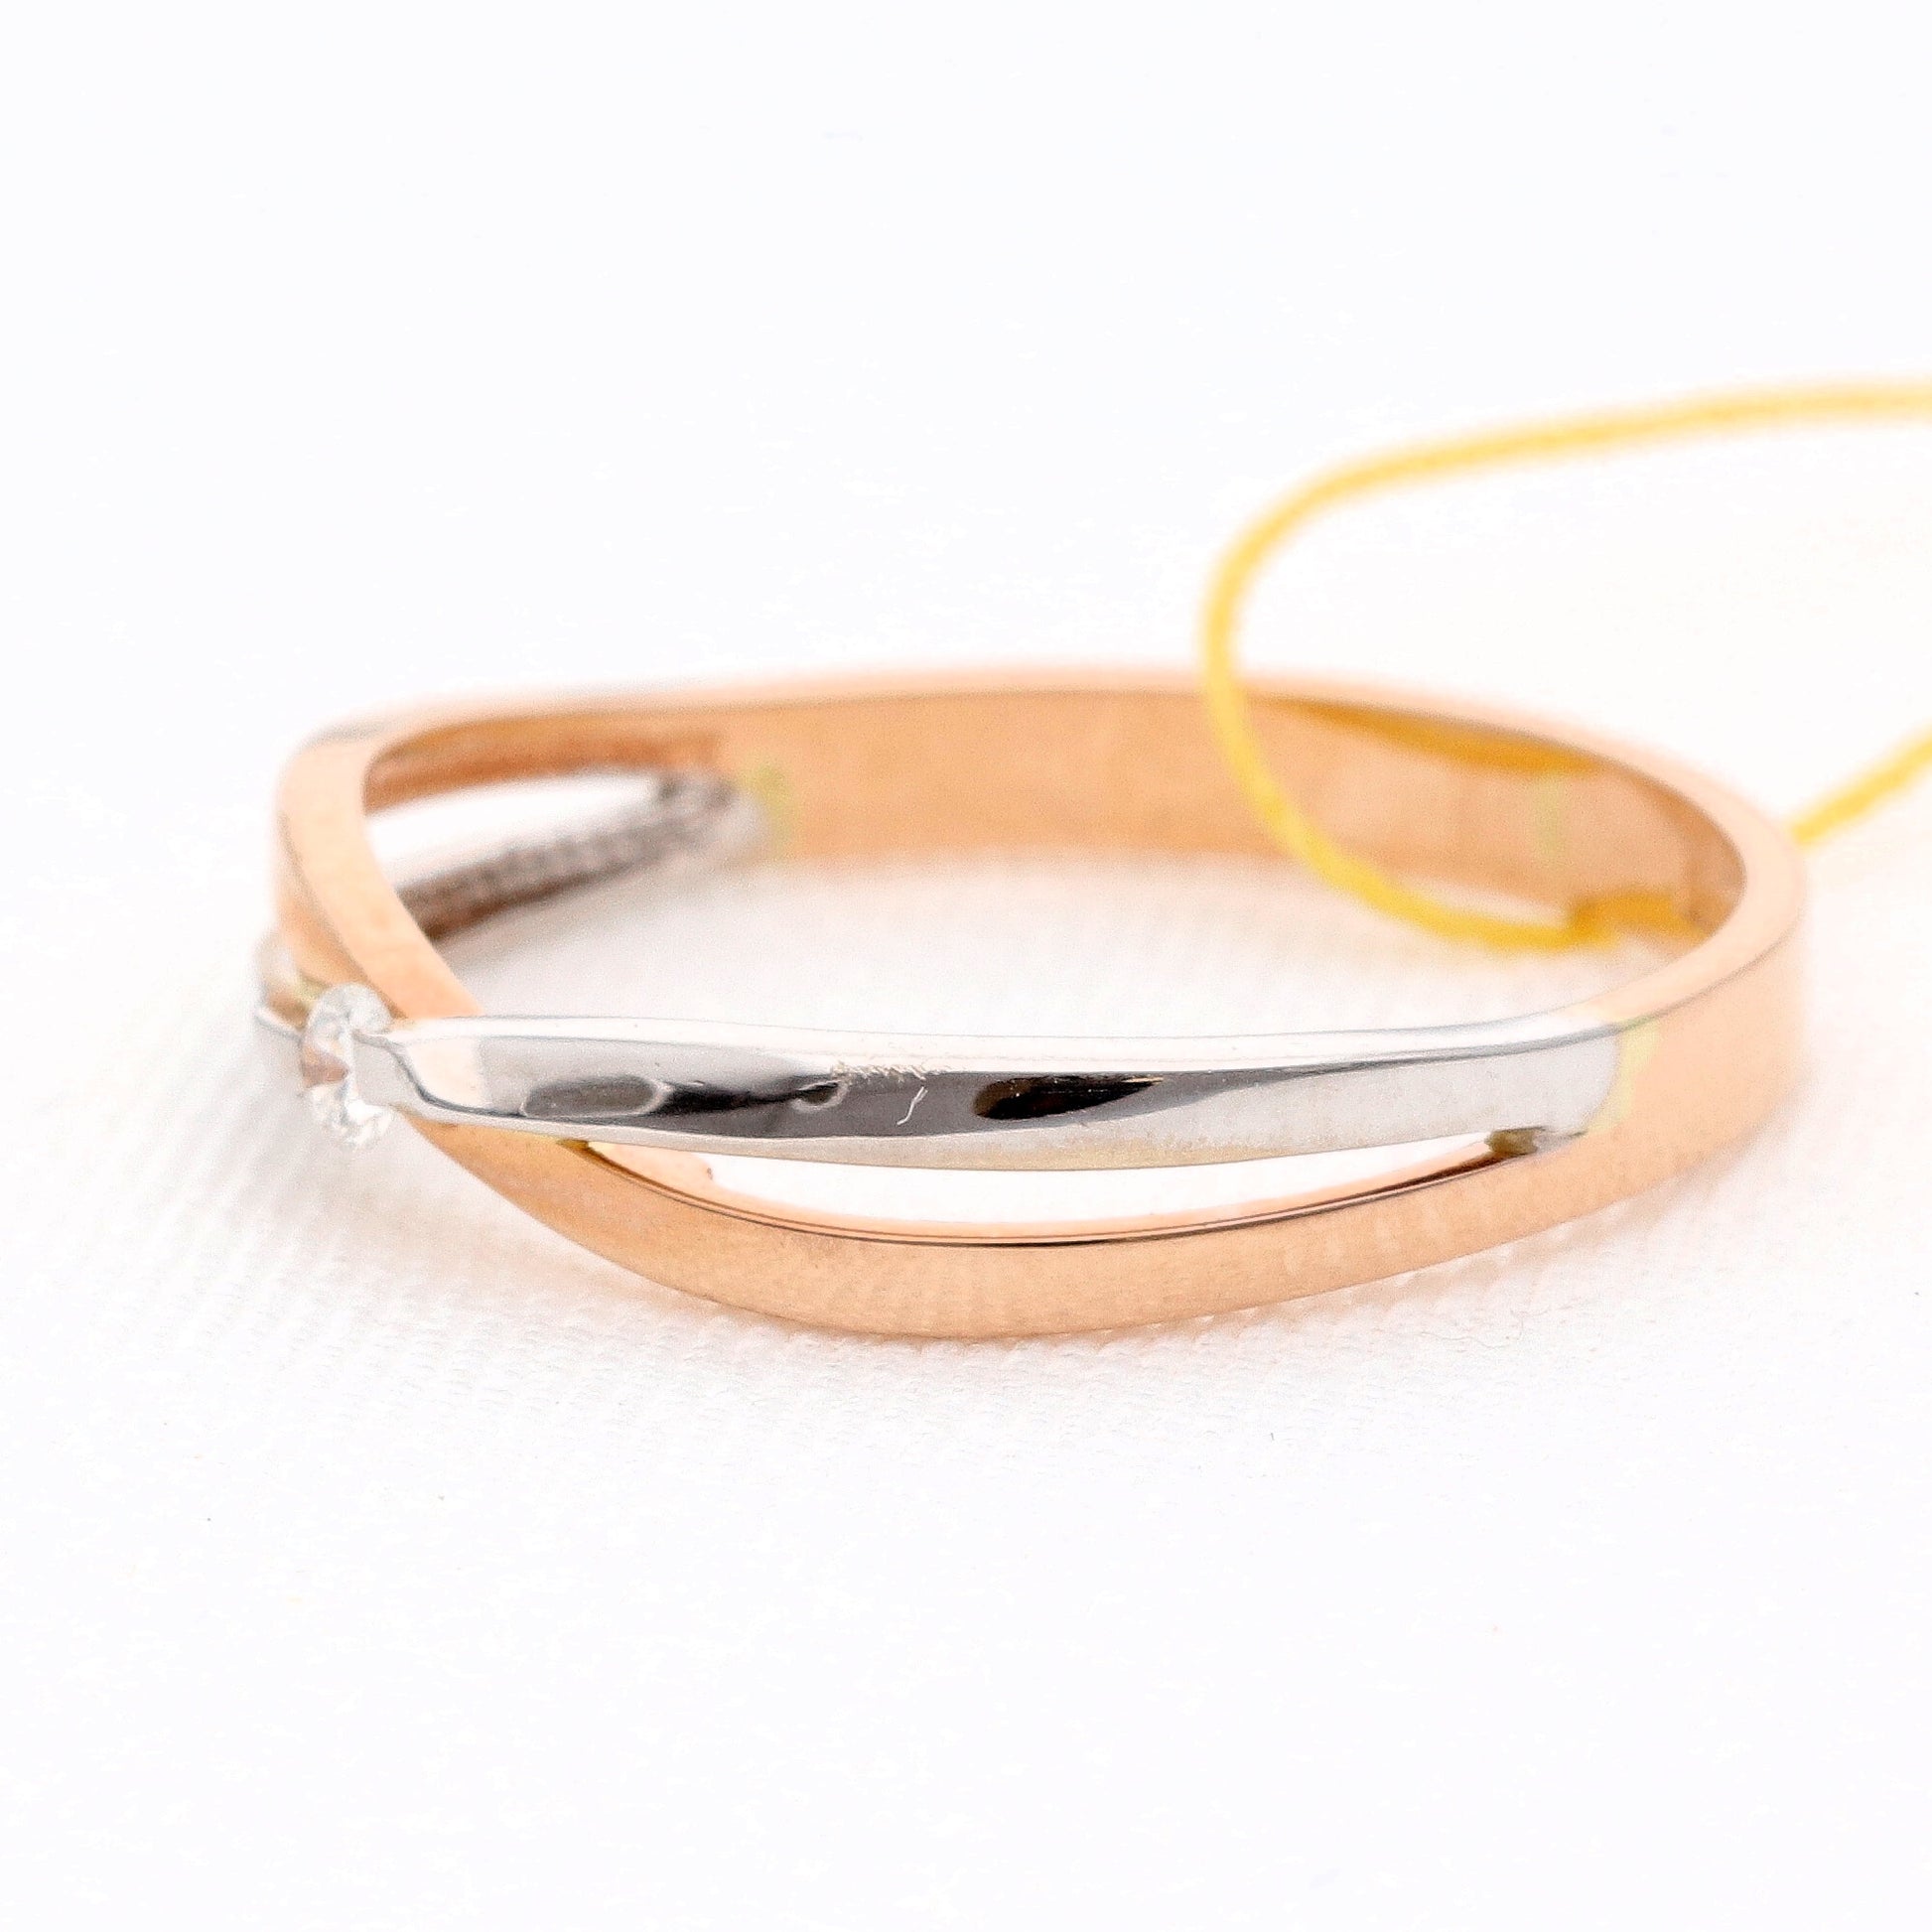 Auksinis žiedas su deimantu 0,03ct vestuviniaiziedai.lt